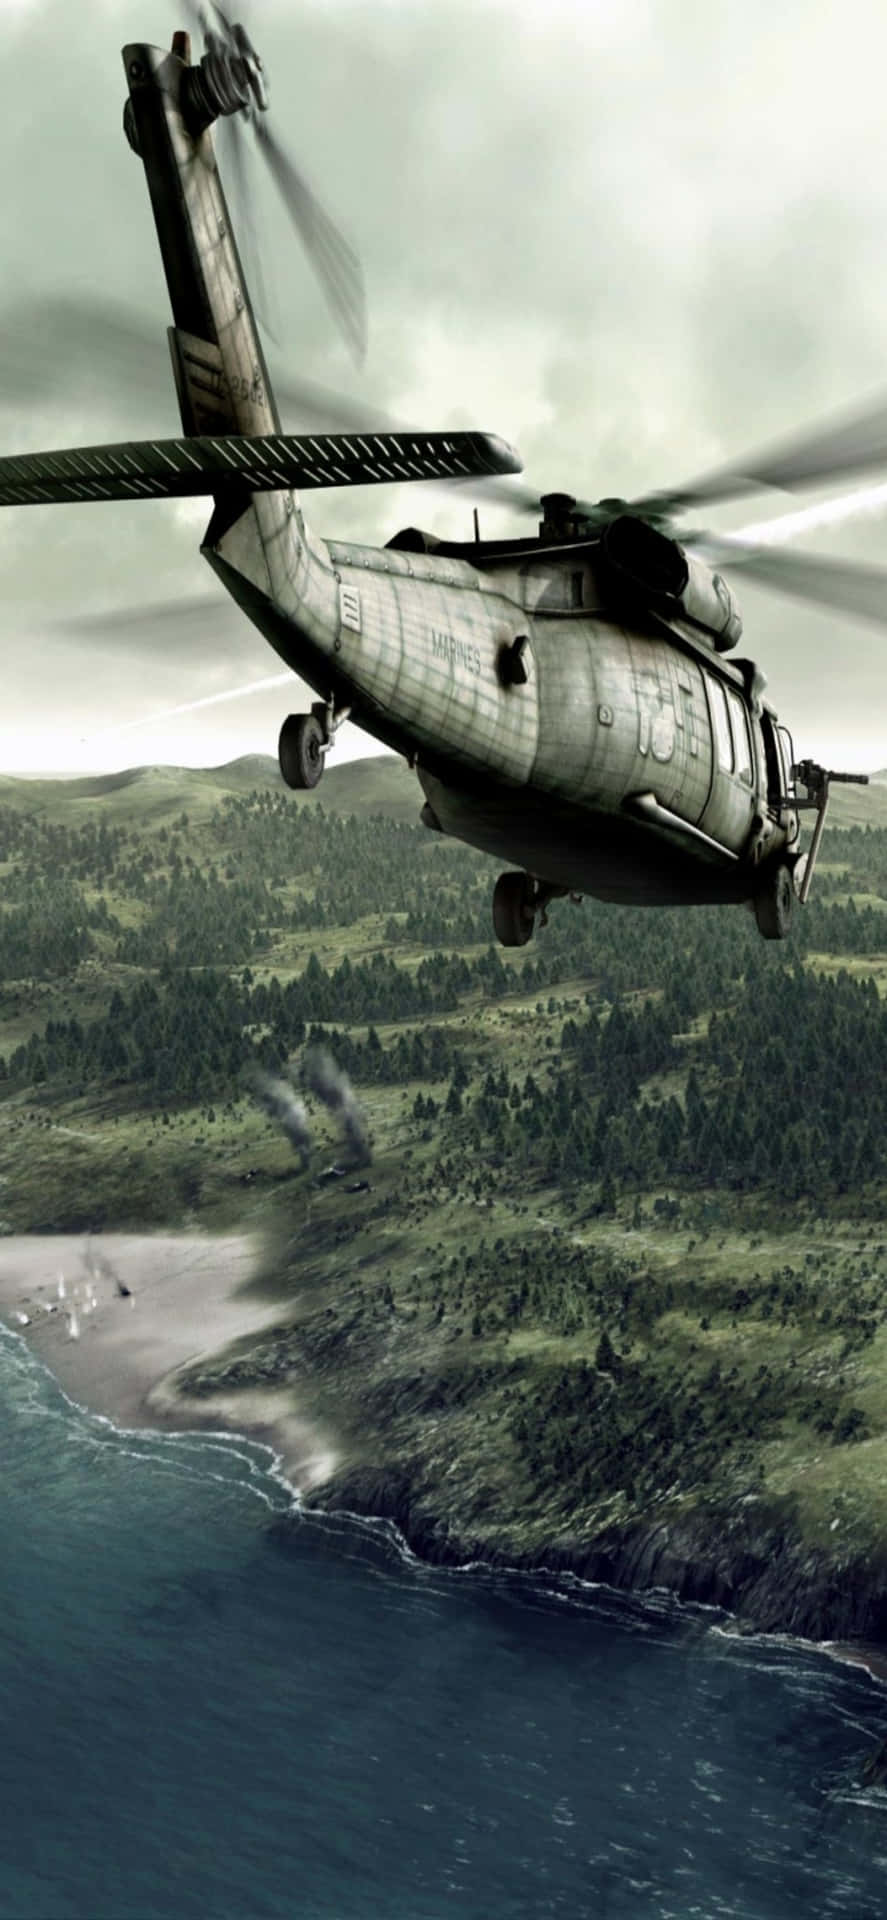 Flyg Högt Med Den Nya Iphone Xs Helicopter-tematapeten!